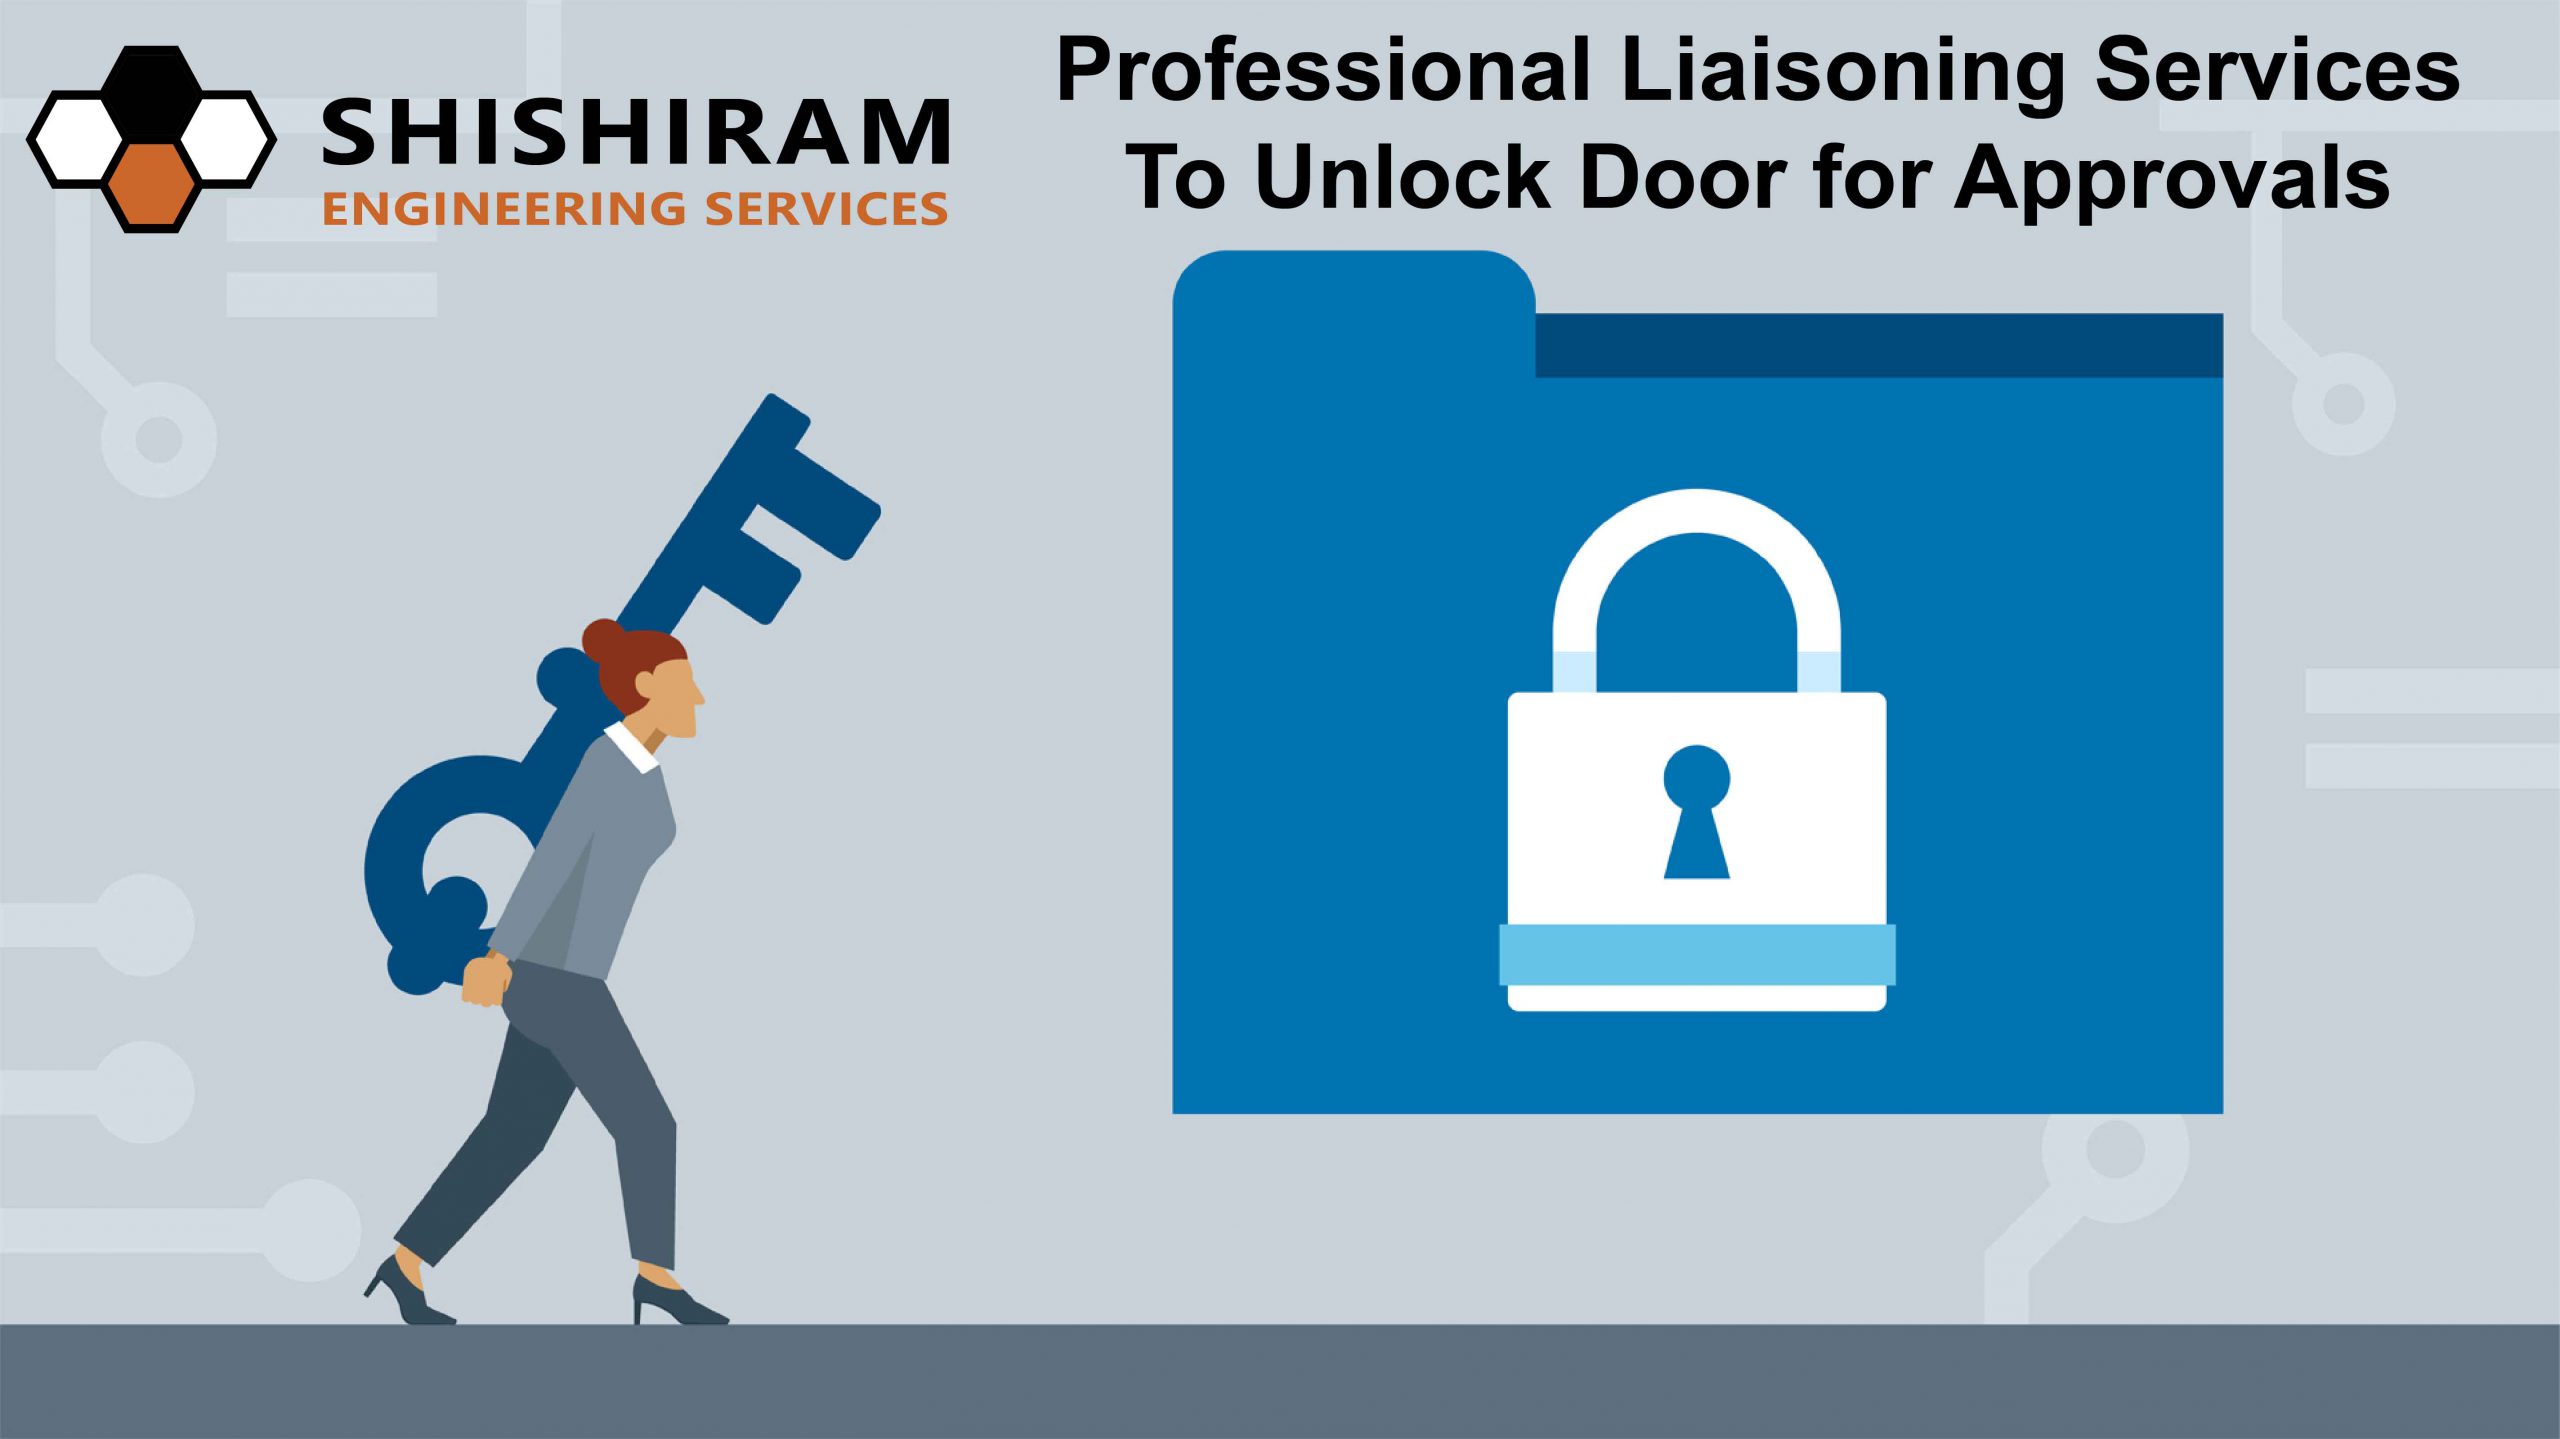 shishiram engineering service professional liaisoning services